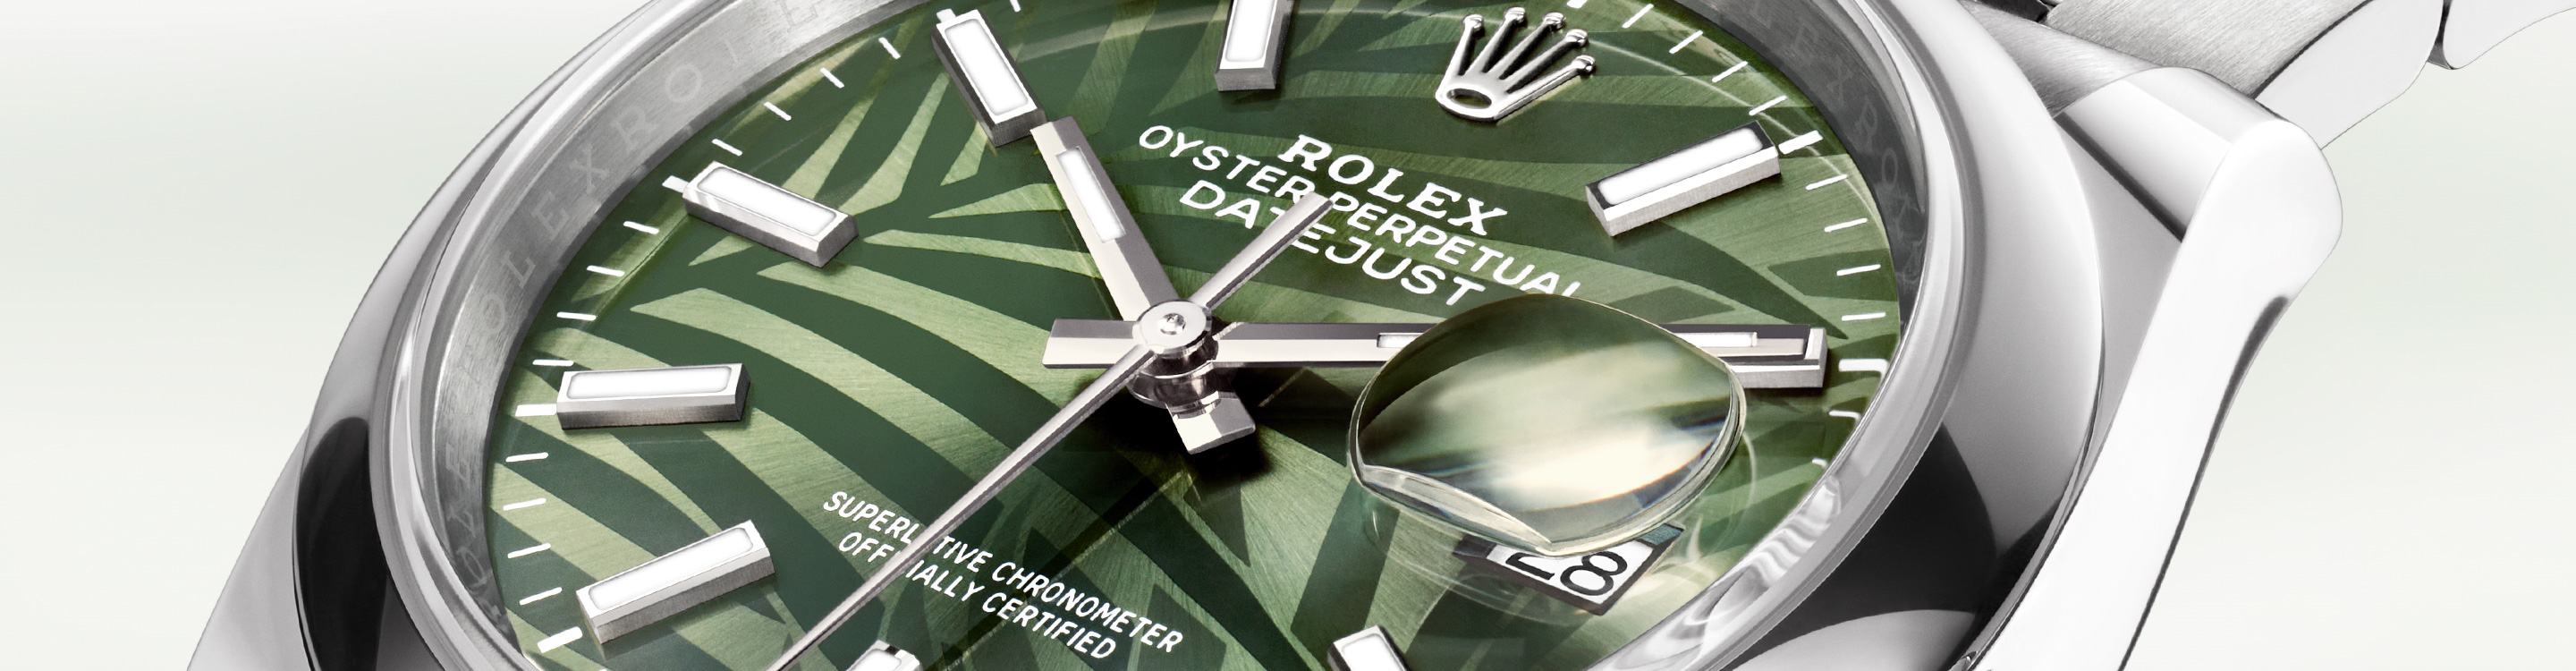 Rolex Datejust at Joyería Grau